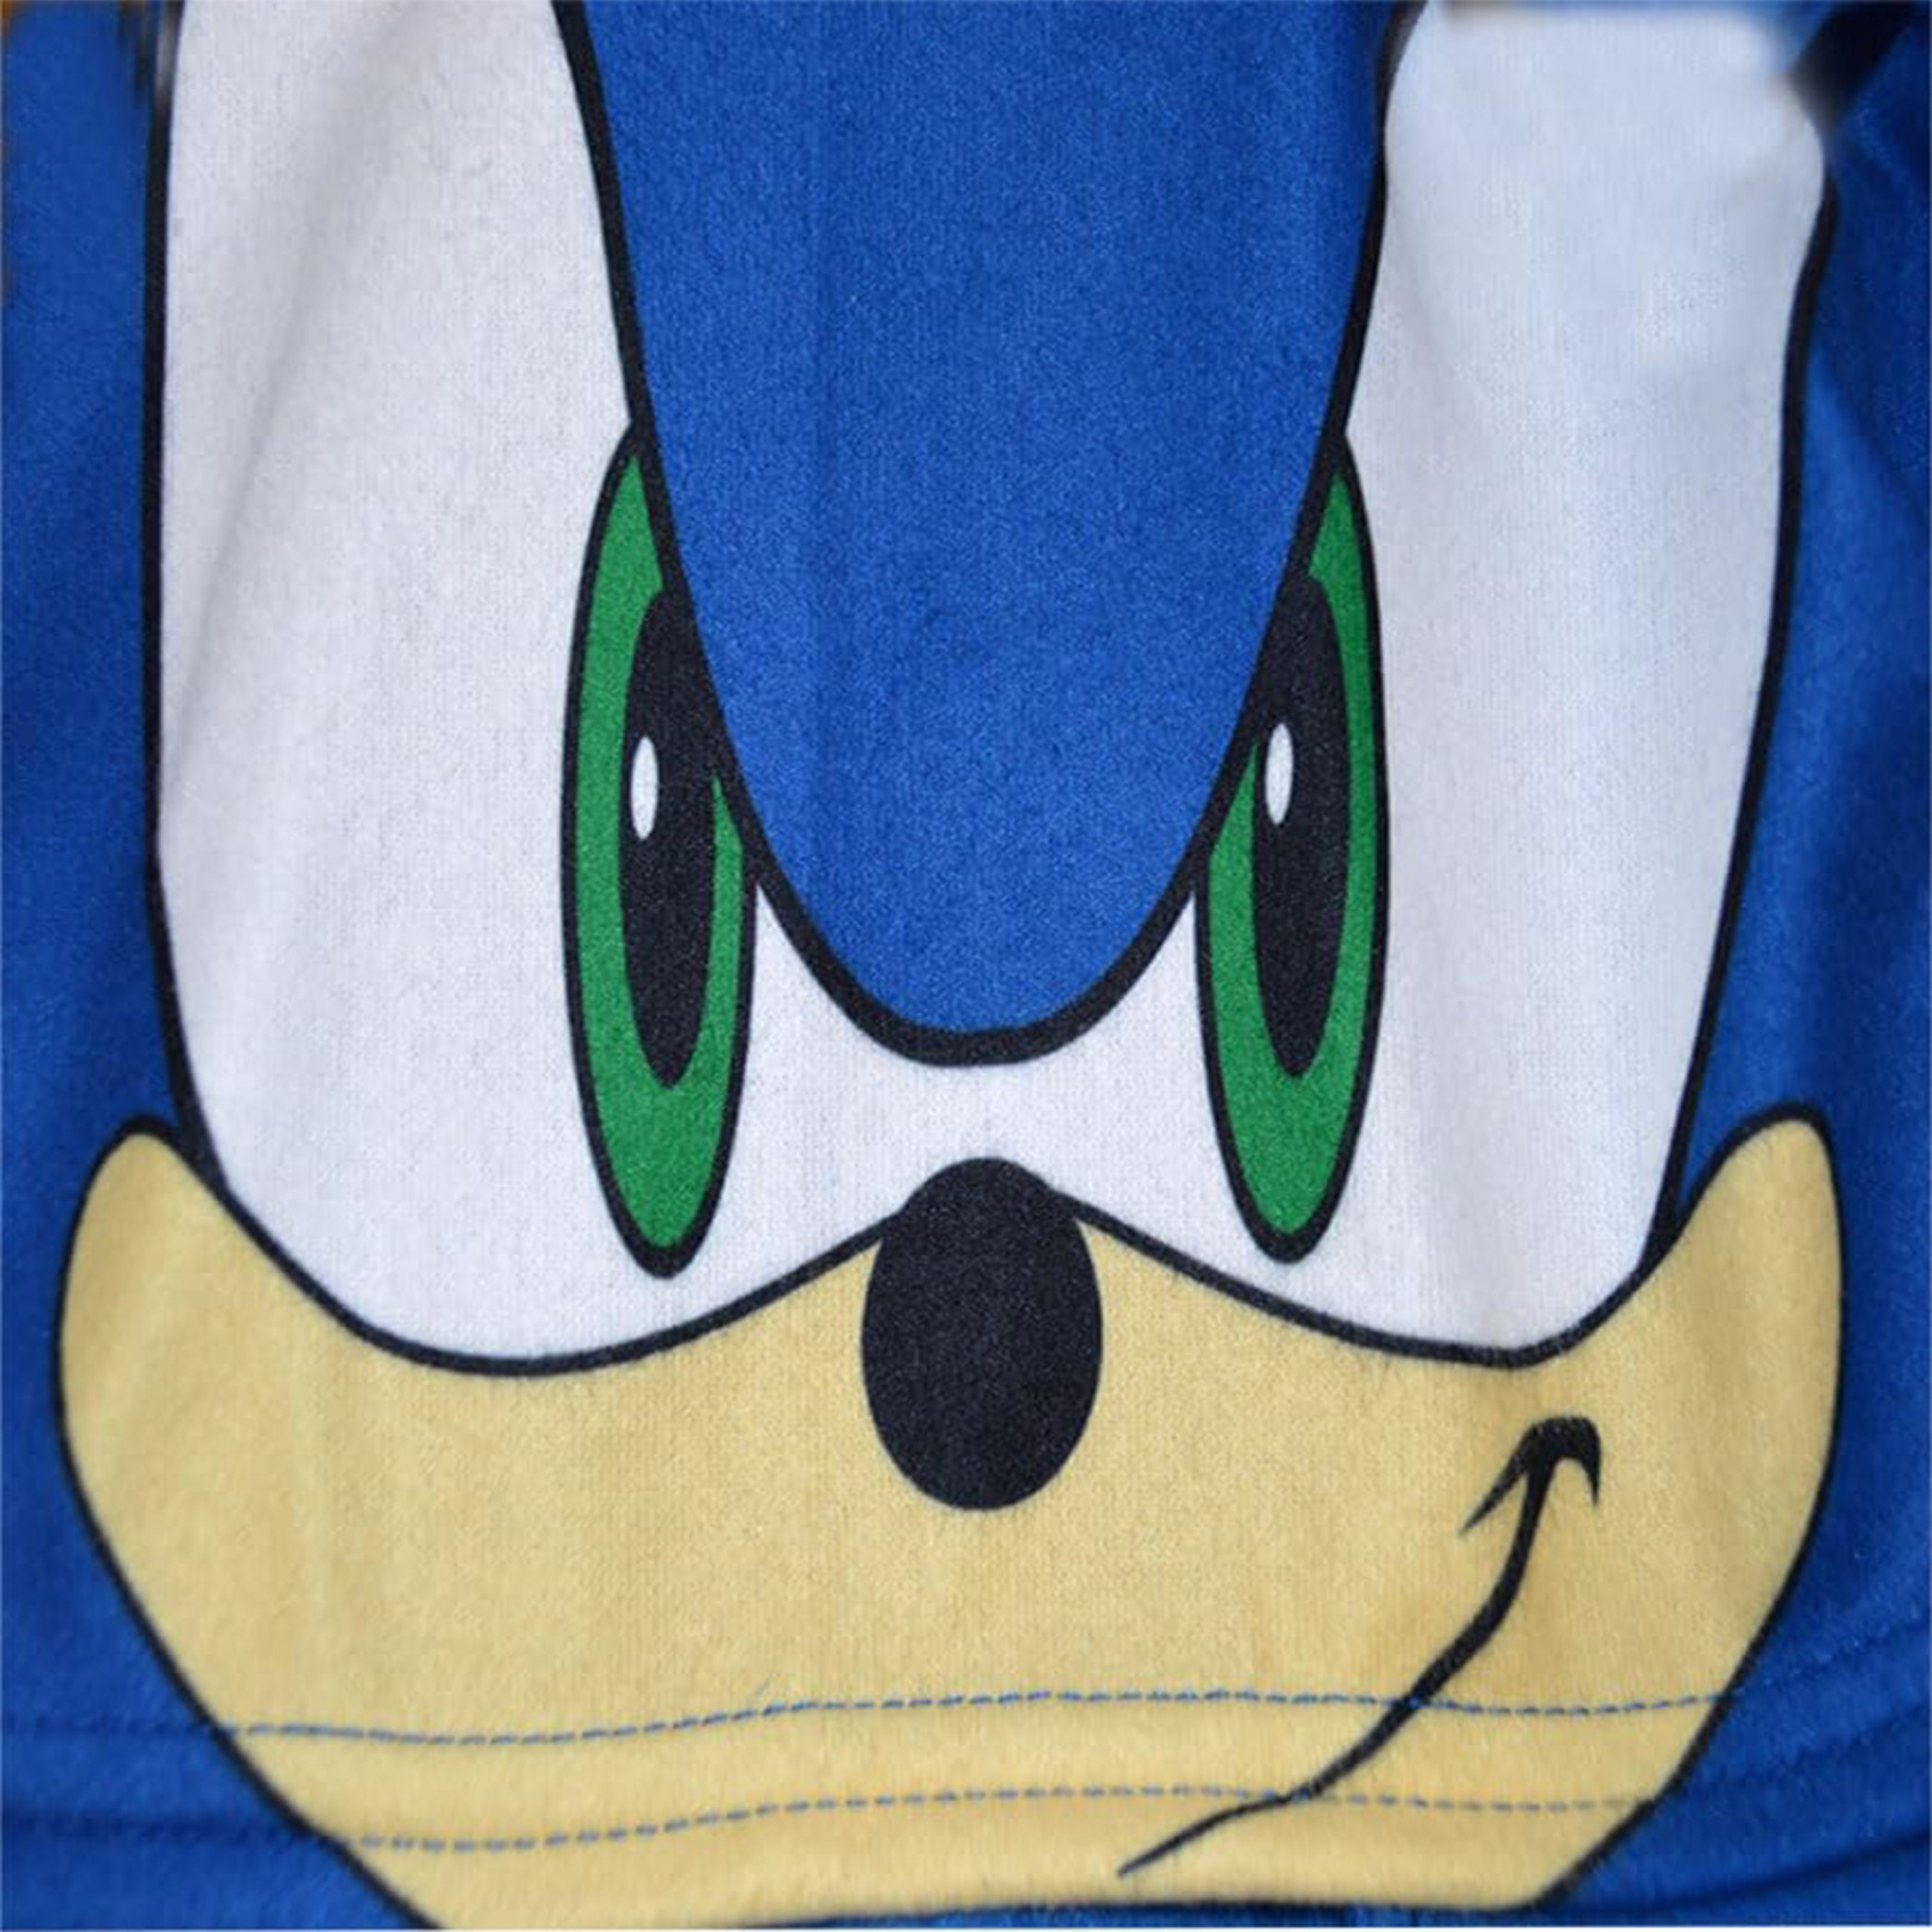 Sonic The Hedgehog Character Cosplay Kids Blanket Sleeper Union Suit Pajamas